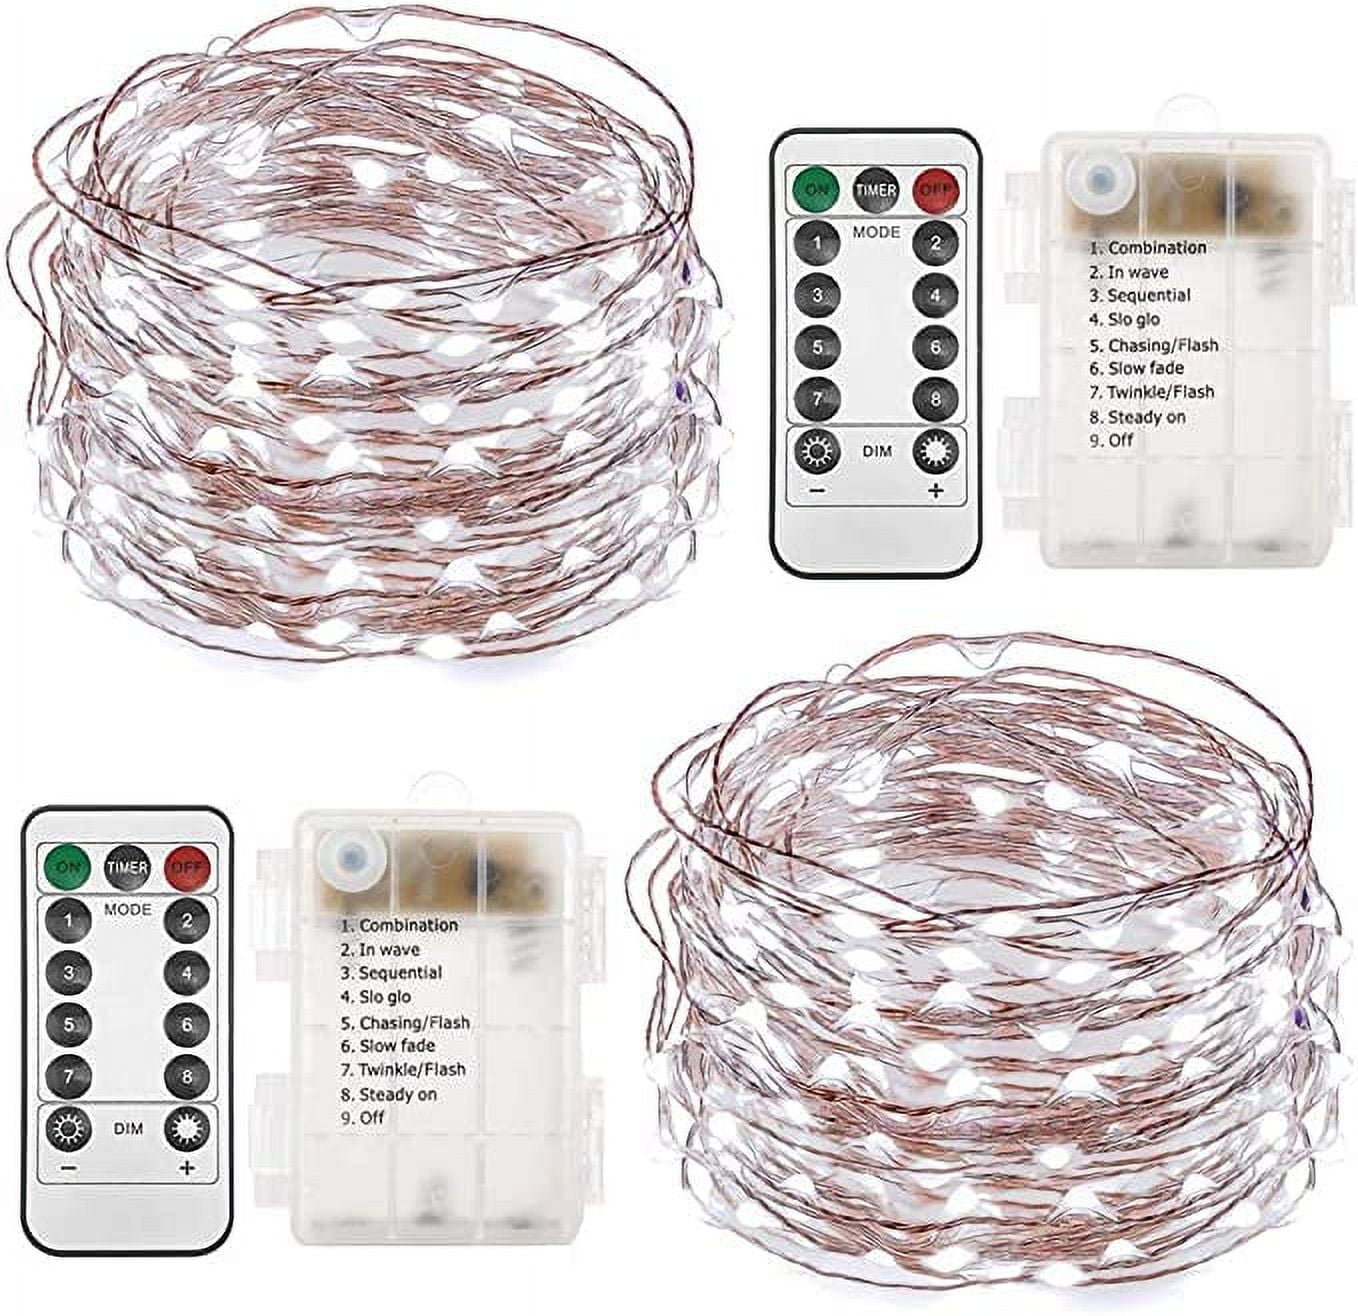 Santa Claus String Lights, Remote Control Battery Box, led Lights, Chr –   Online Shop